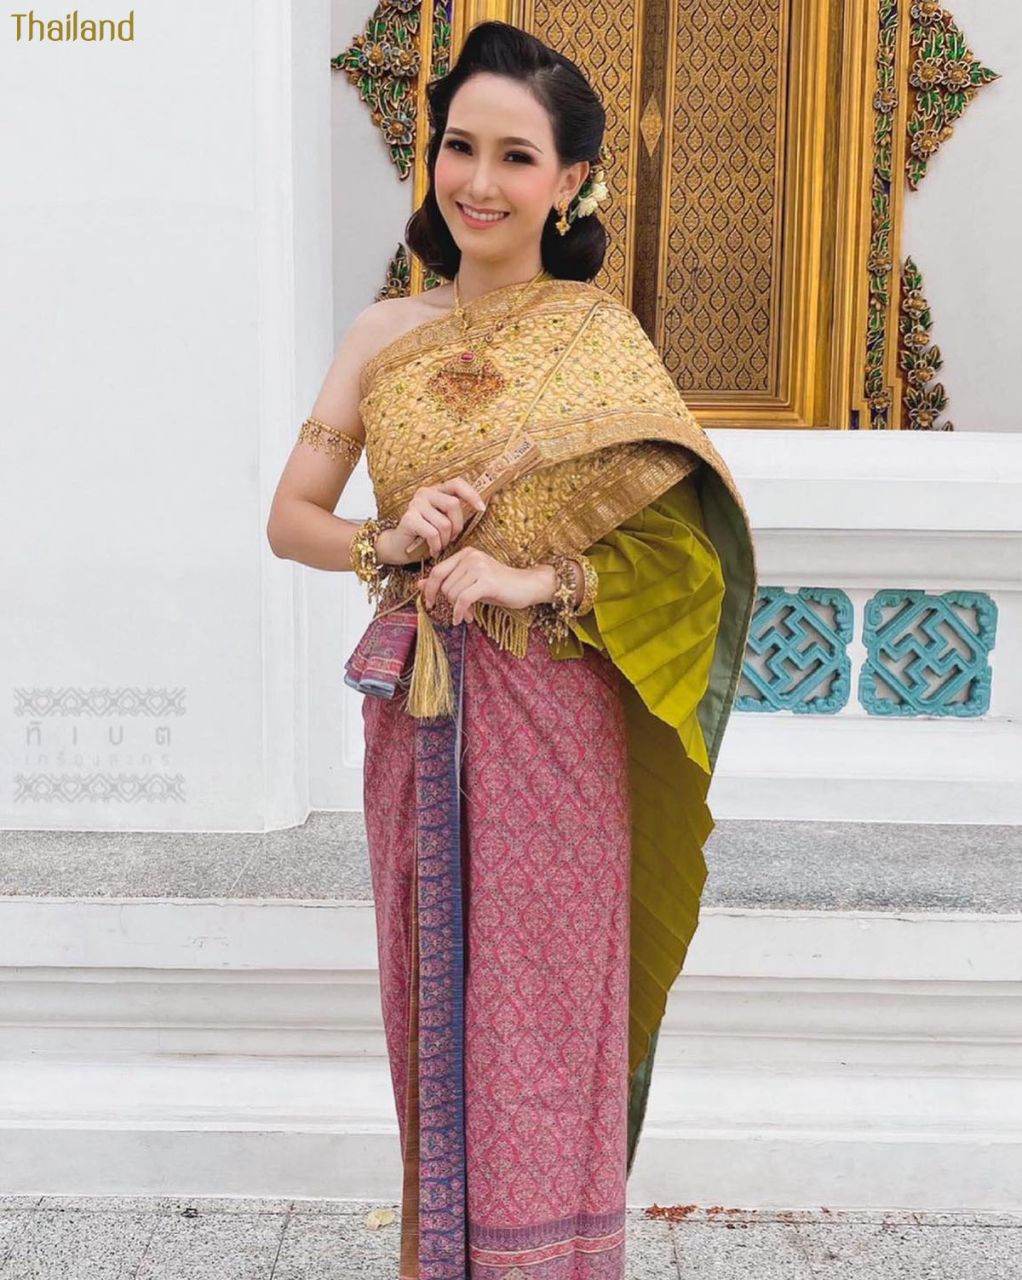 THAI DRESS, ชุดไทย: THAI NATIONAL COSTUME | THAILAND 🇹🇭